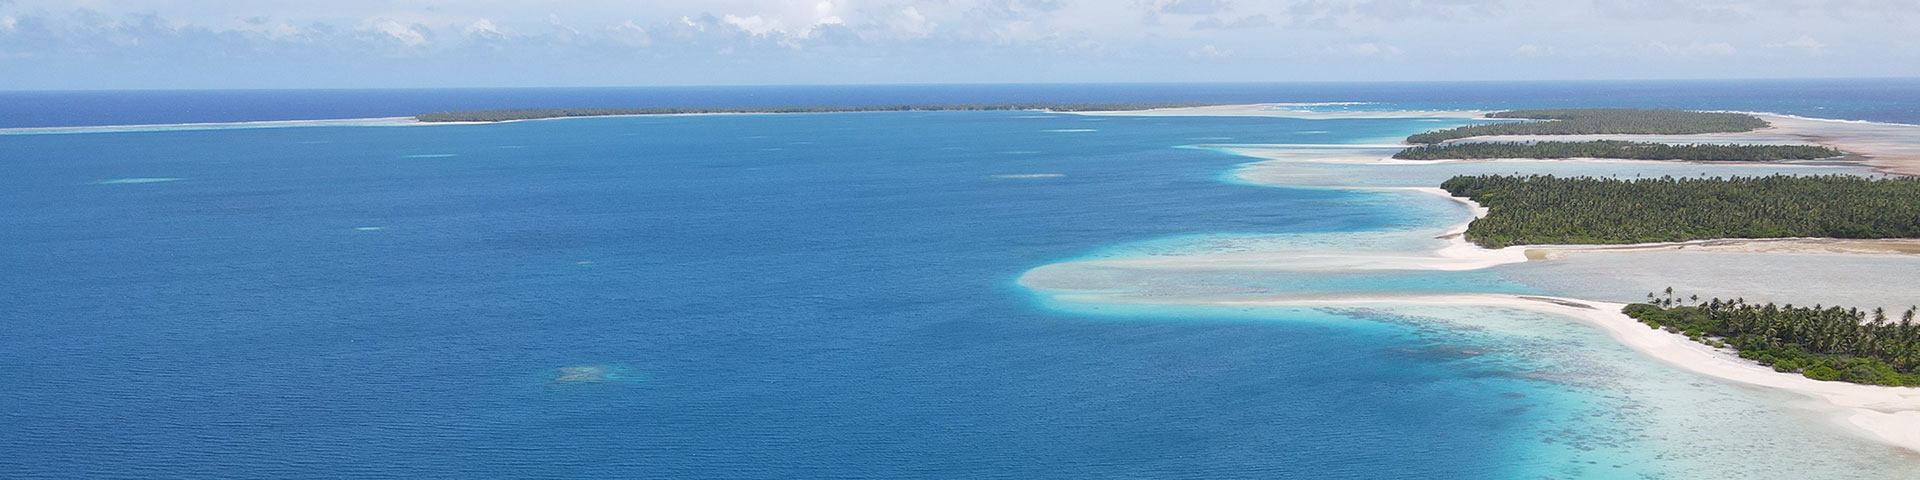 Pequeñas islas verdes rodeadas de mar turquesa